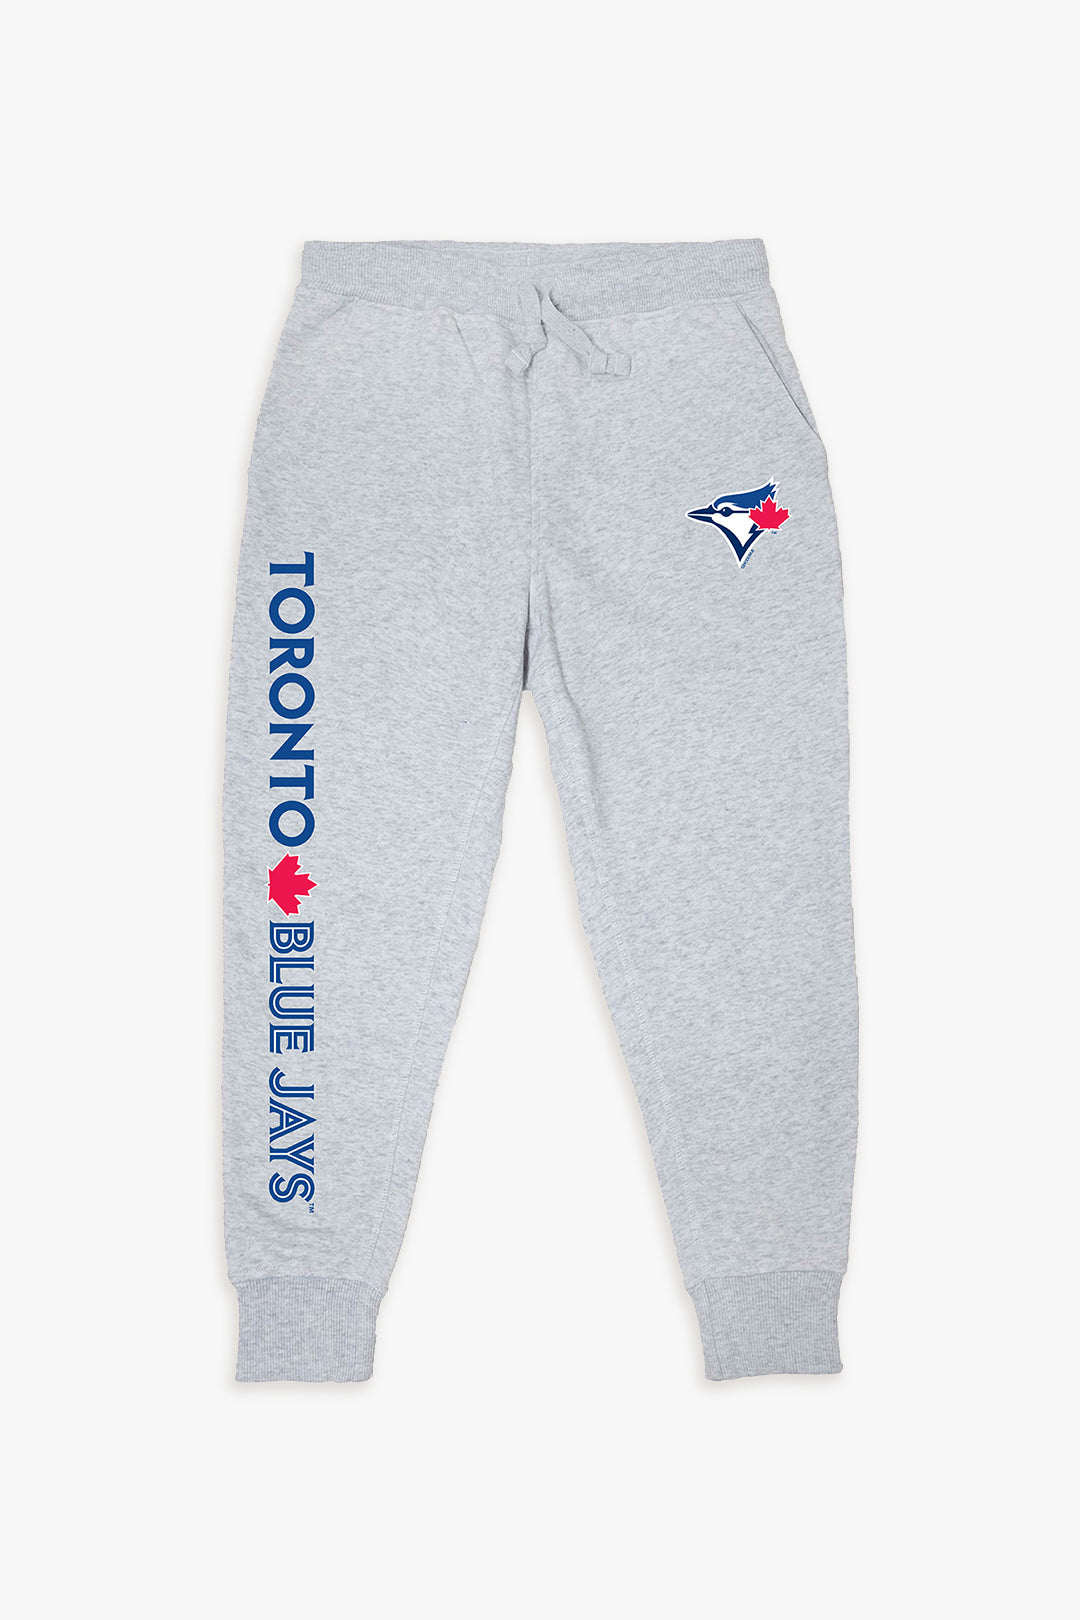 MLB Toronto Blue Jays Light Grey Kids Lounge Pants